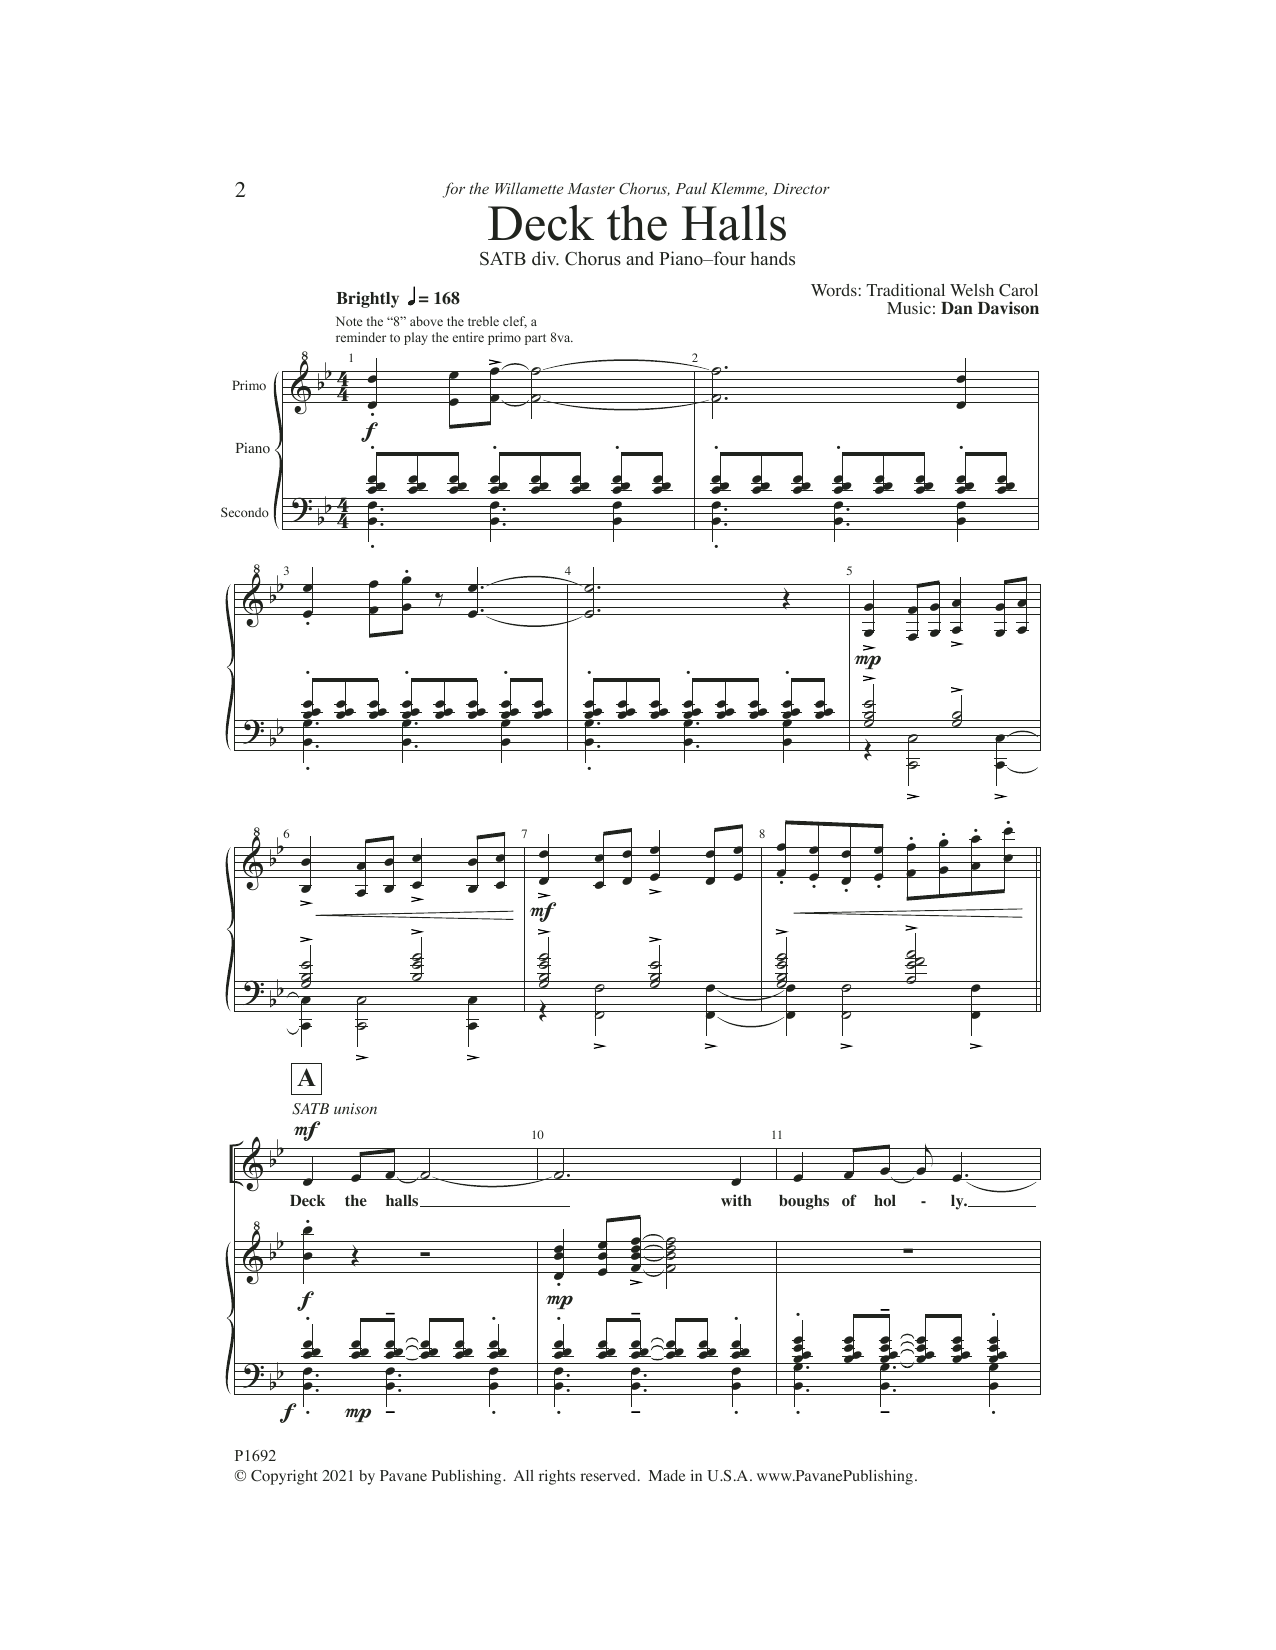 Dan Davison Deck the Halls Sheet Music Notes & Chords for SATB Choir - Download or Print PDF